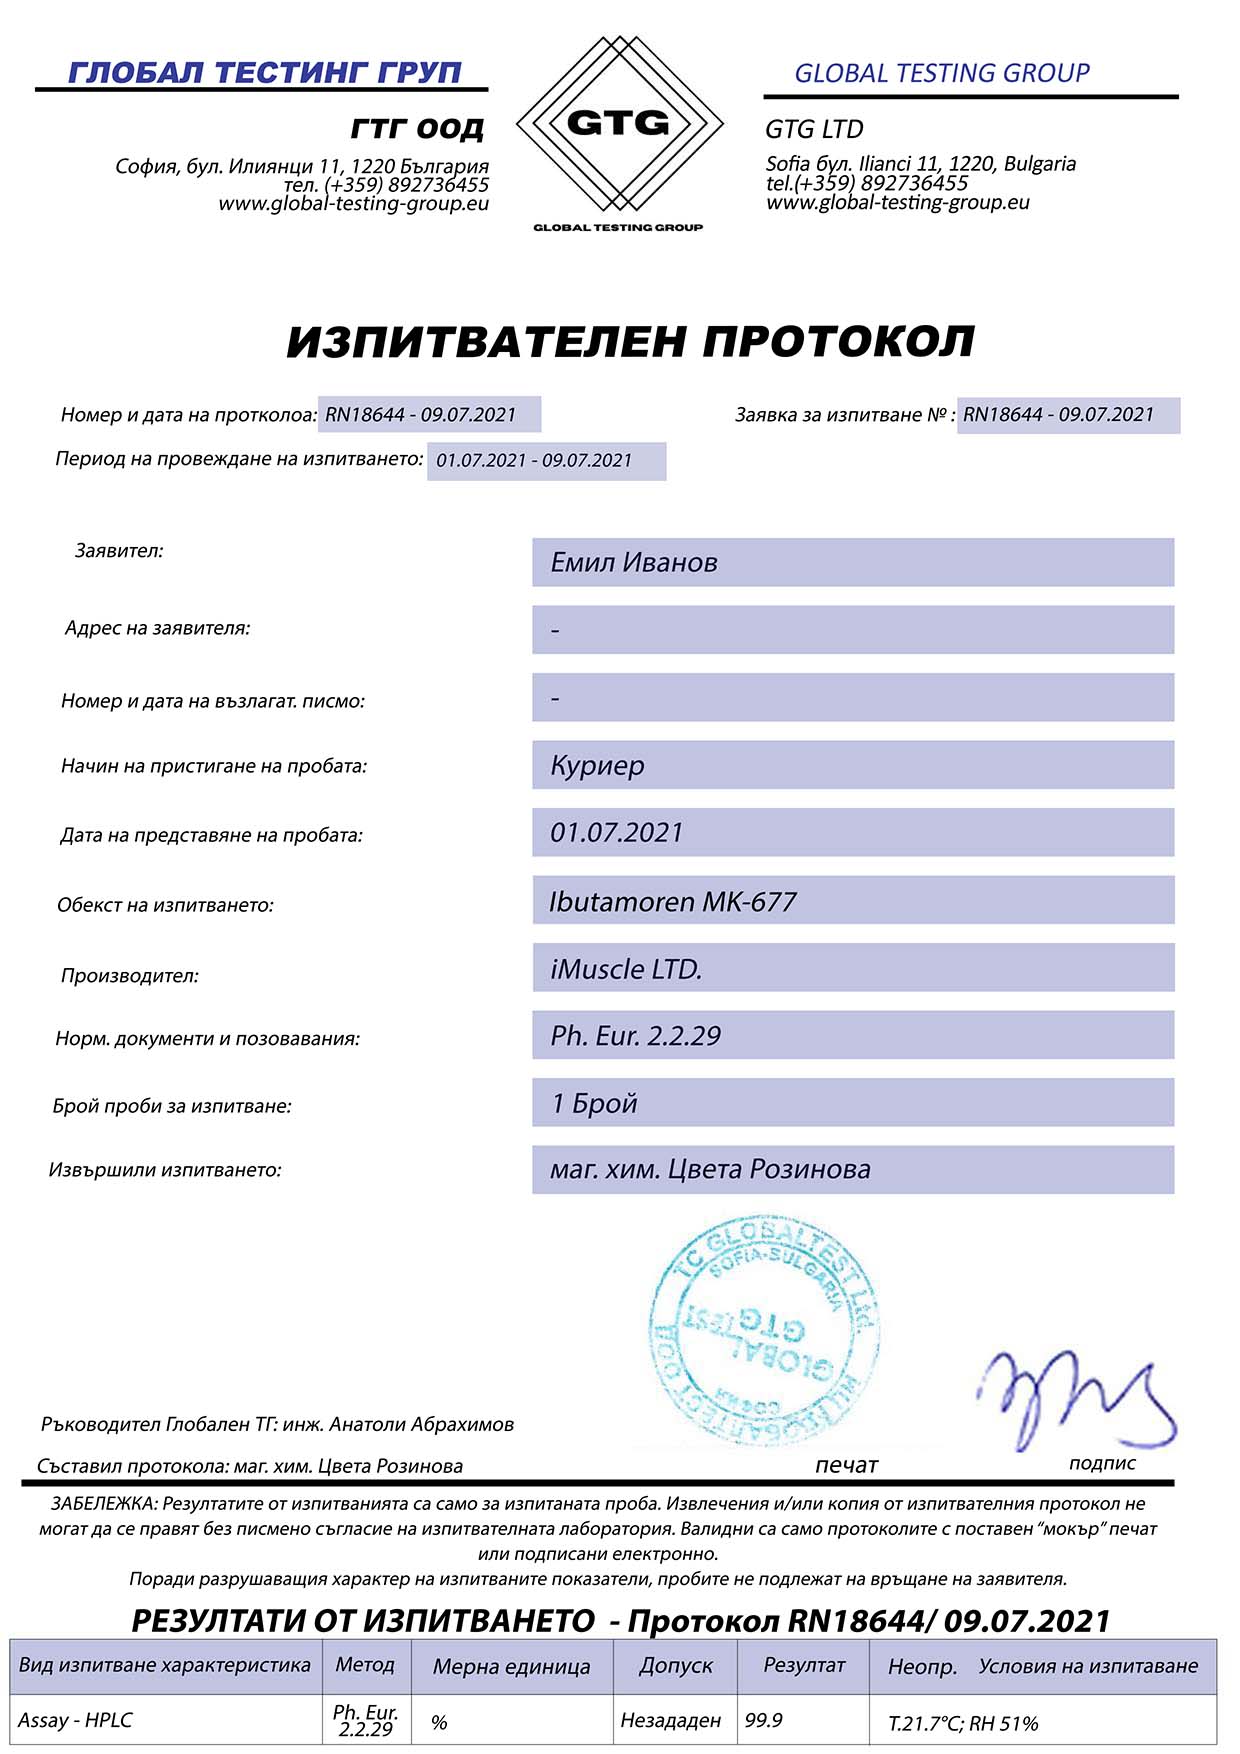 SARM Ibutamoren MK-677 quality certificate